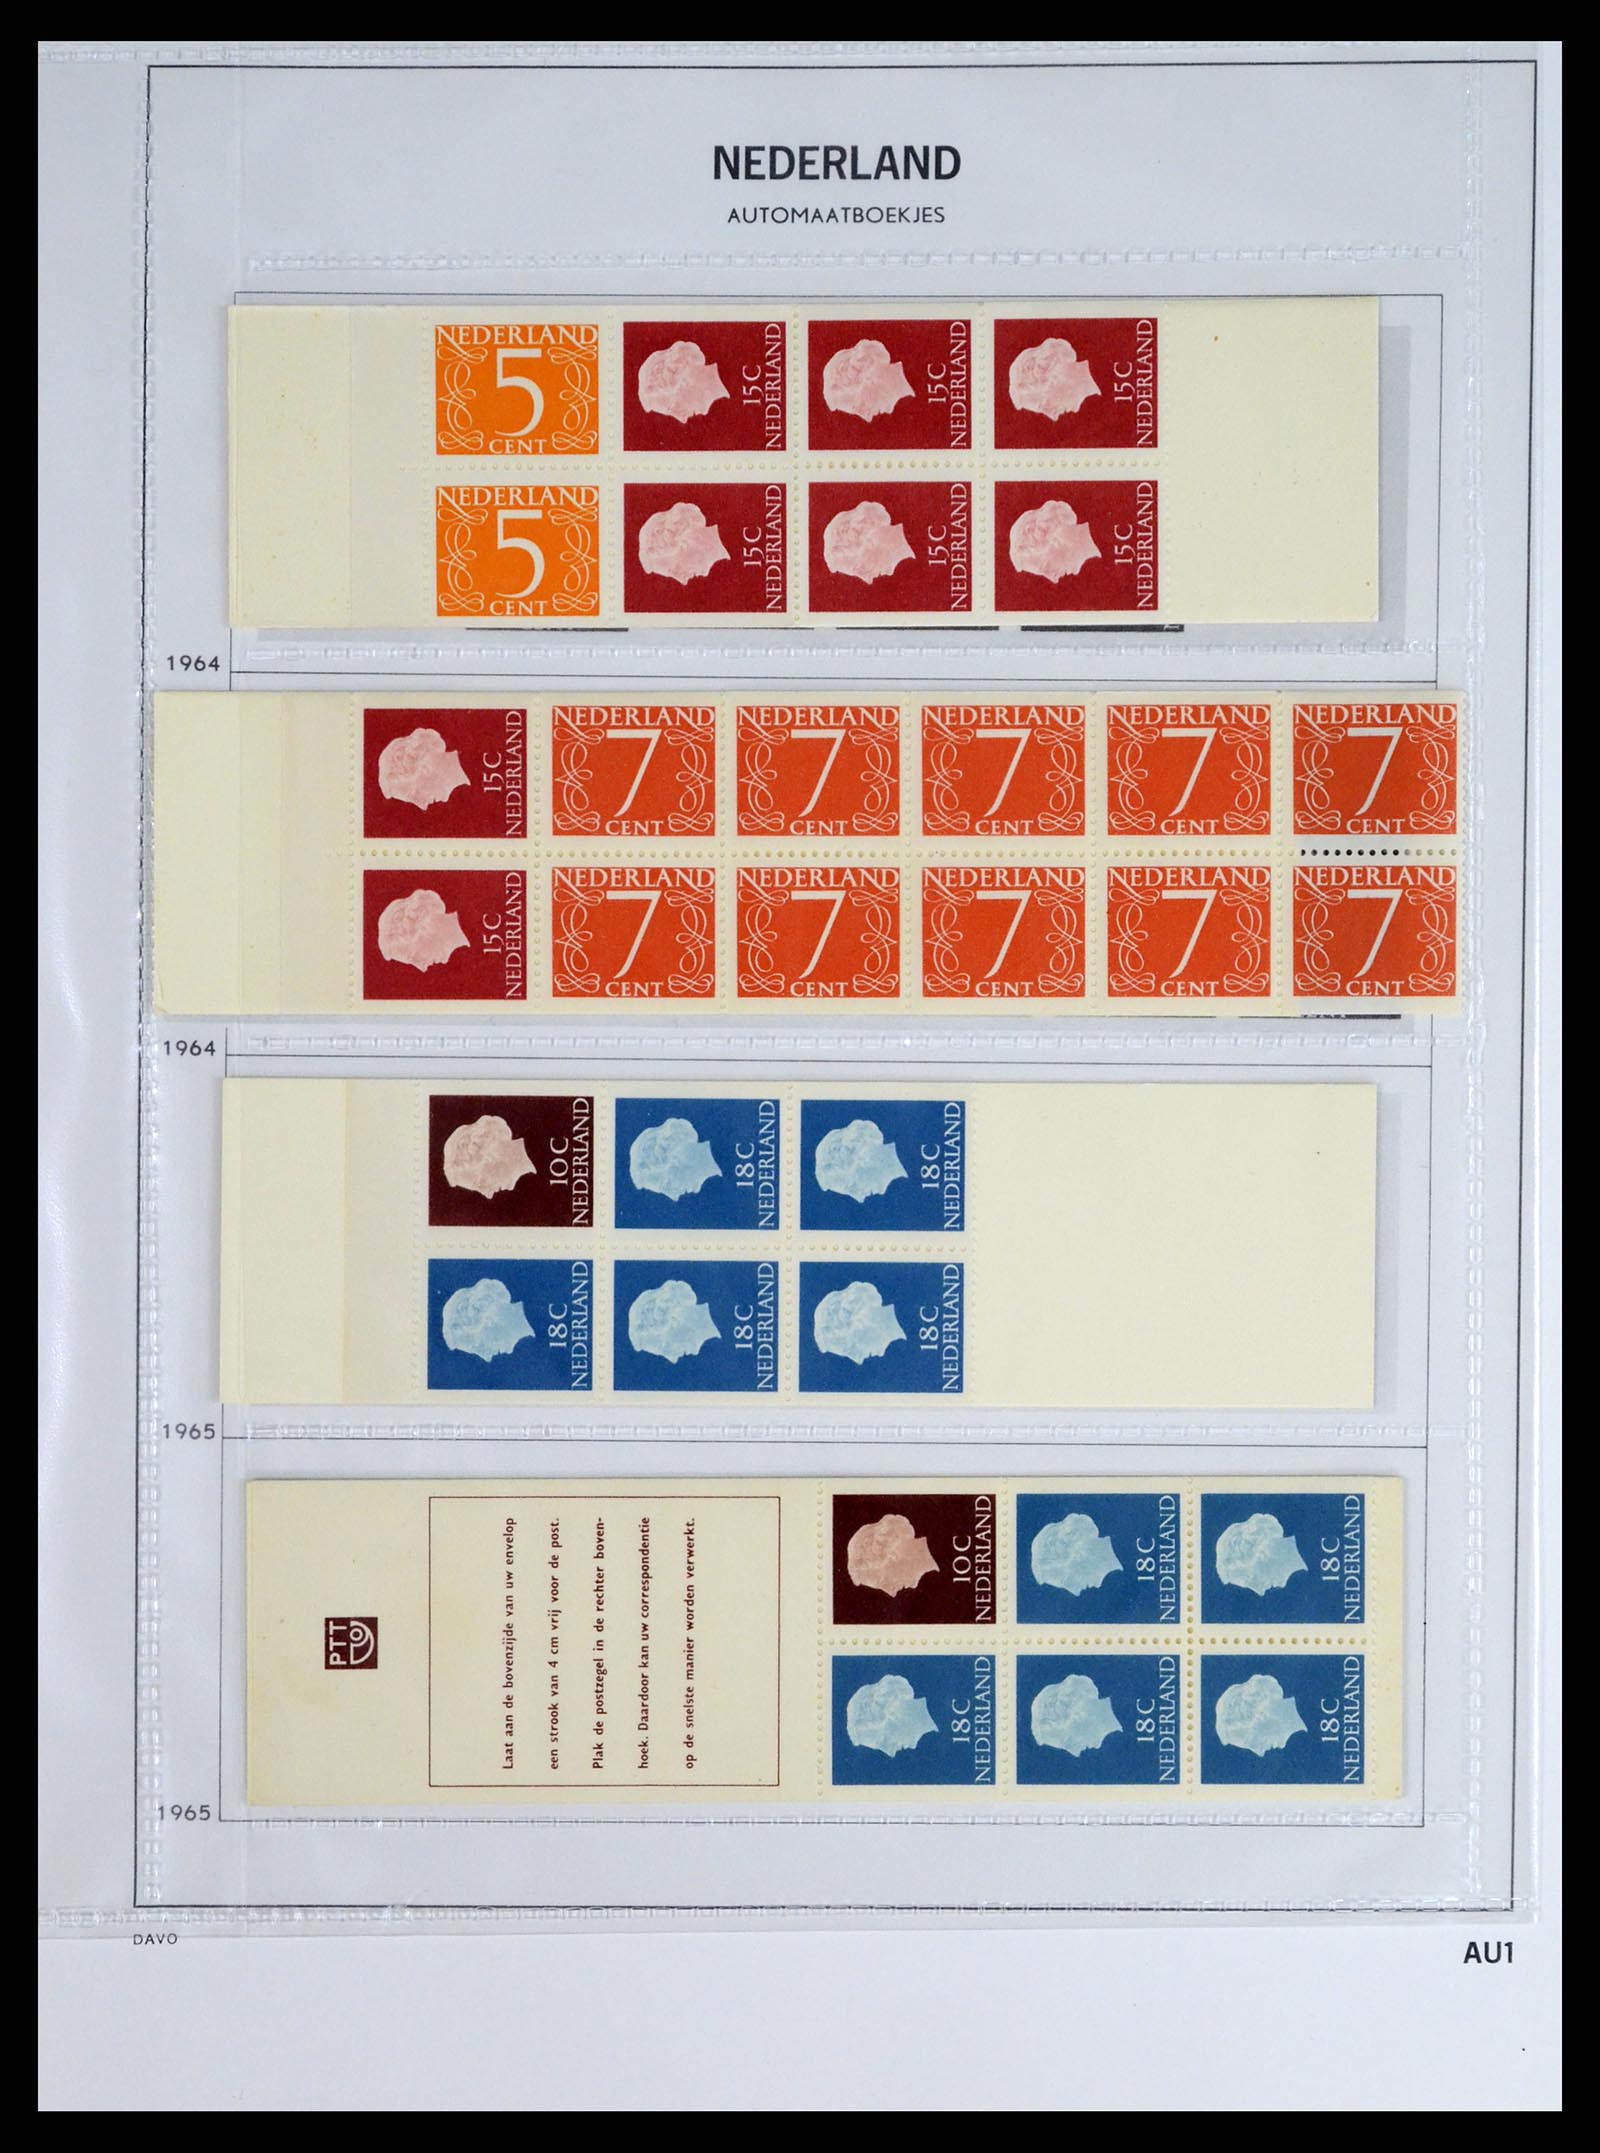 37331 001 - Stamp collection 37331 Netherlands stamp booklets 1964-2002.